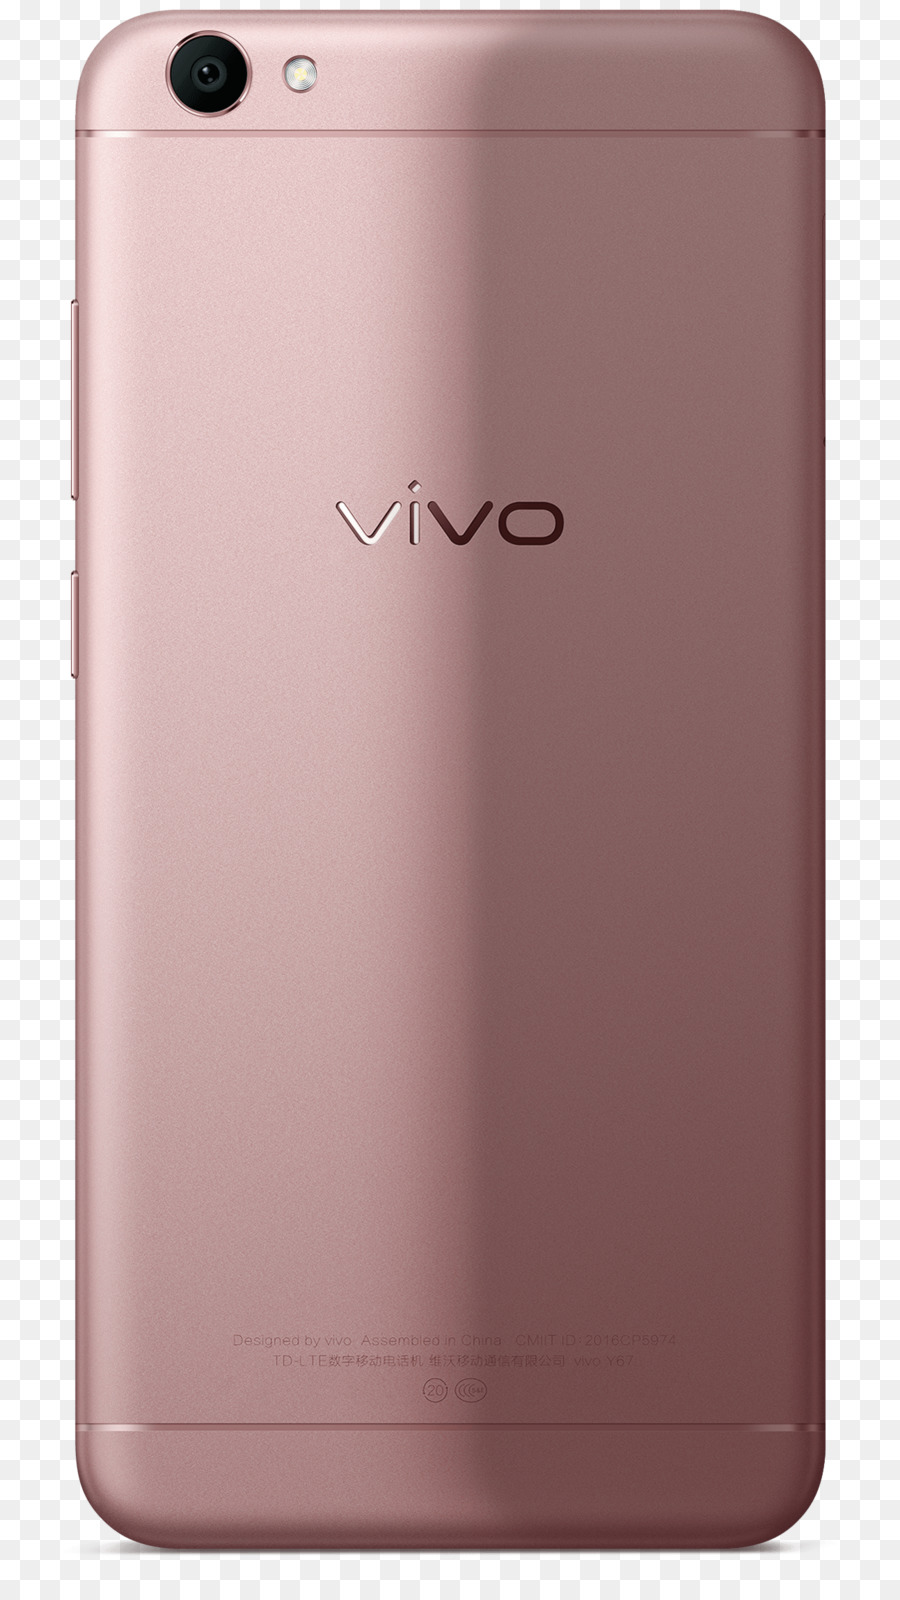 Vivo iphone. Vivo 67. Vivo айфон. Мобильный телефон designed by vivo. Vivo designed by vivo.